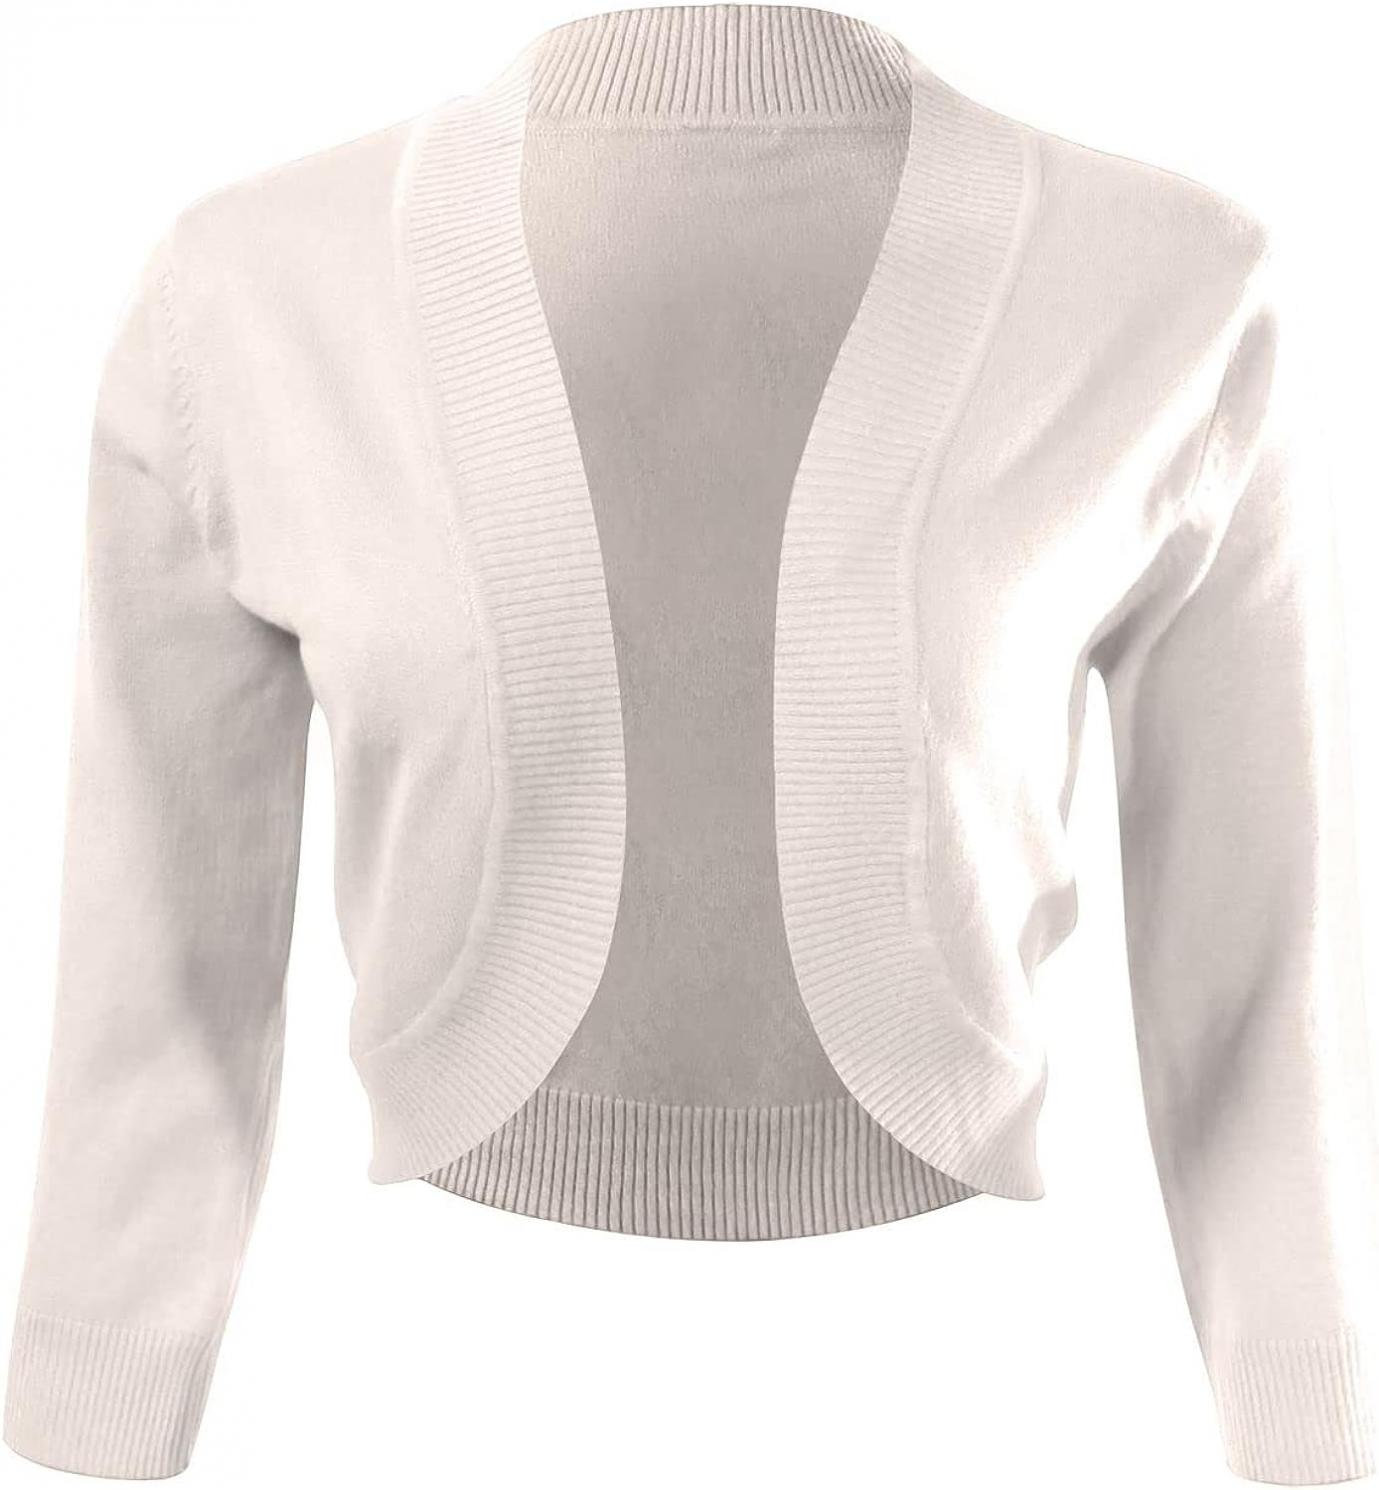 Allsense Women's 3/4 Sleeve Cropped Open Front Bolero Shrug Cardigan Sweater Jacket